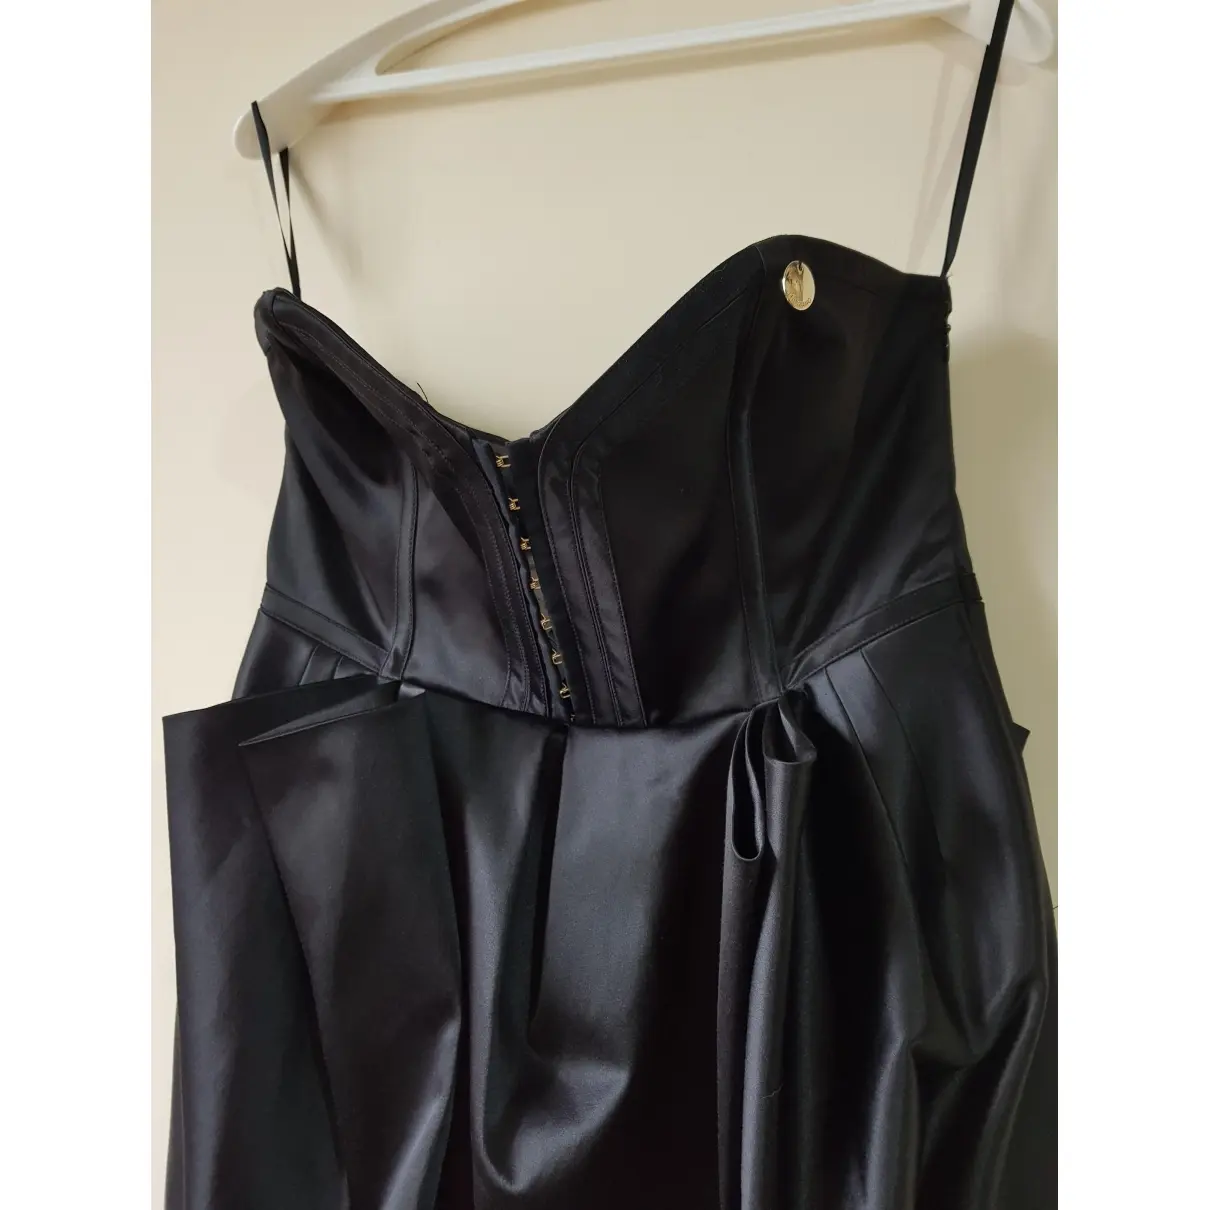 Mangano Mid-length dress for sale